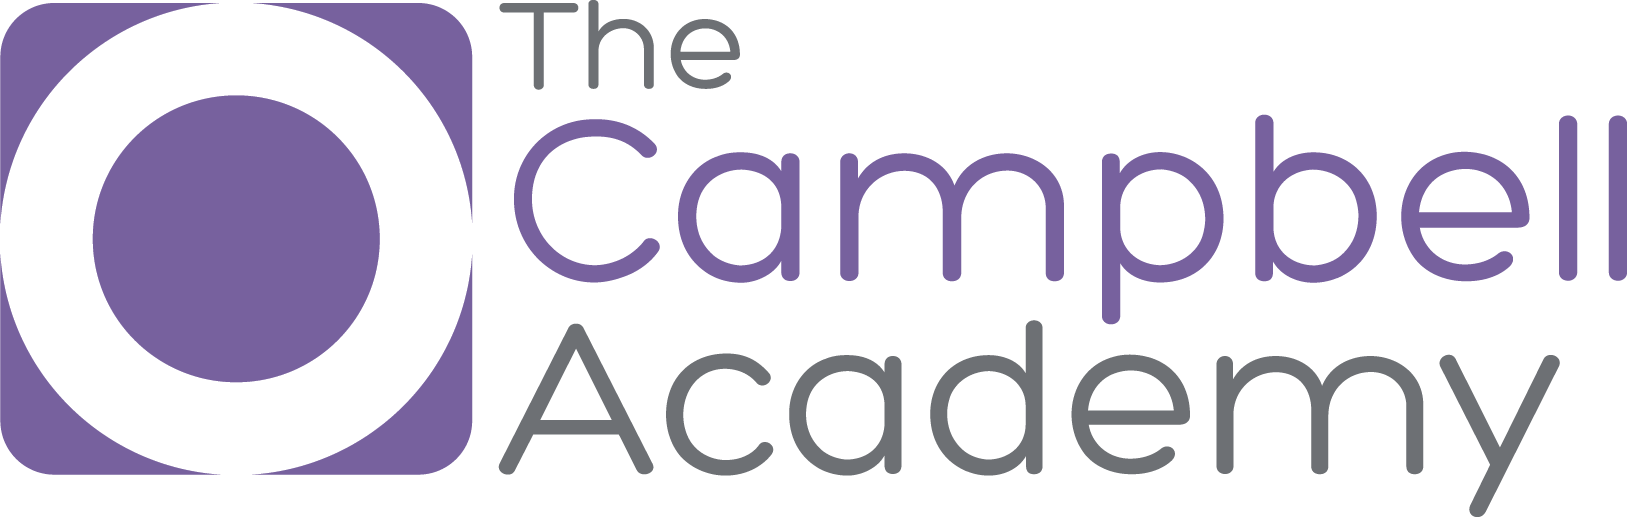 Full TCA Logo (Purple)